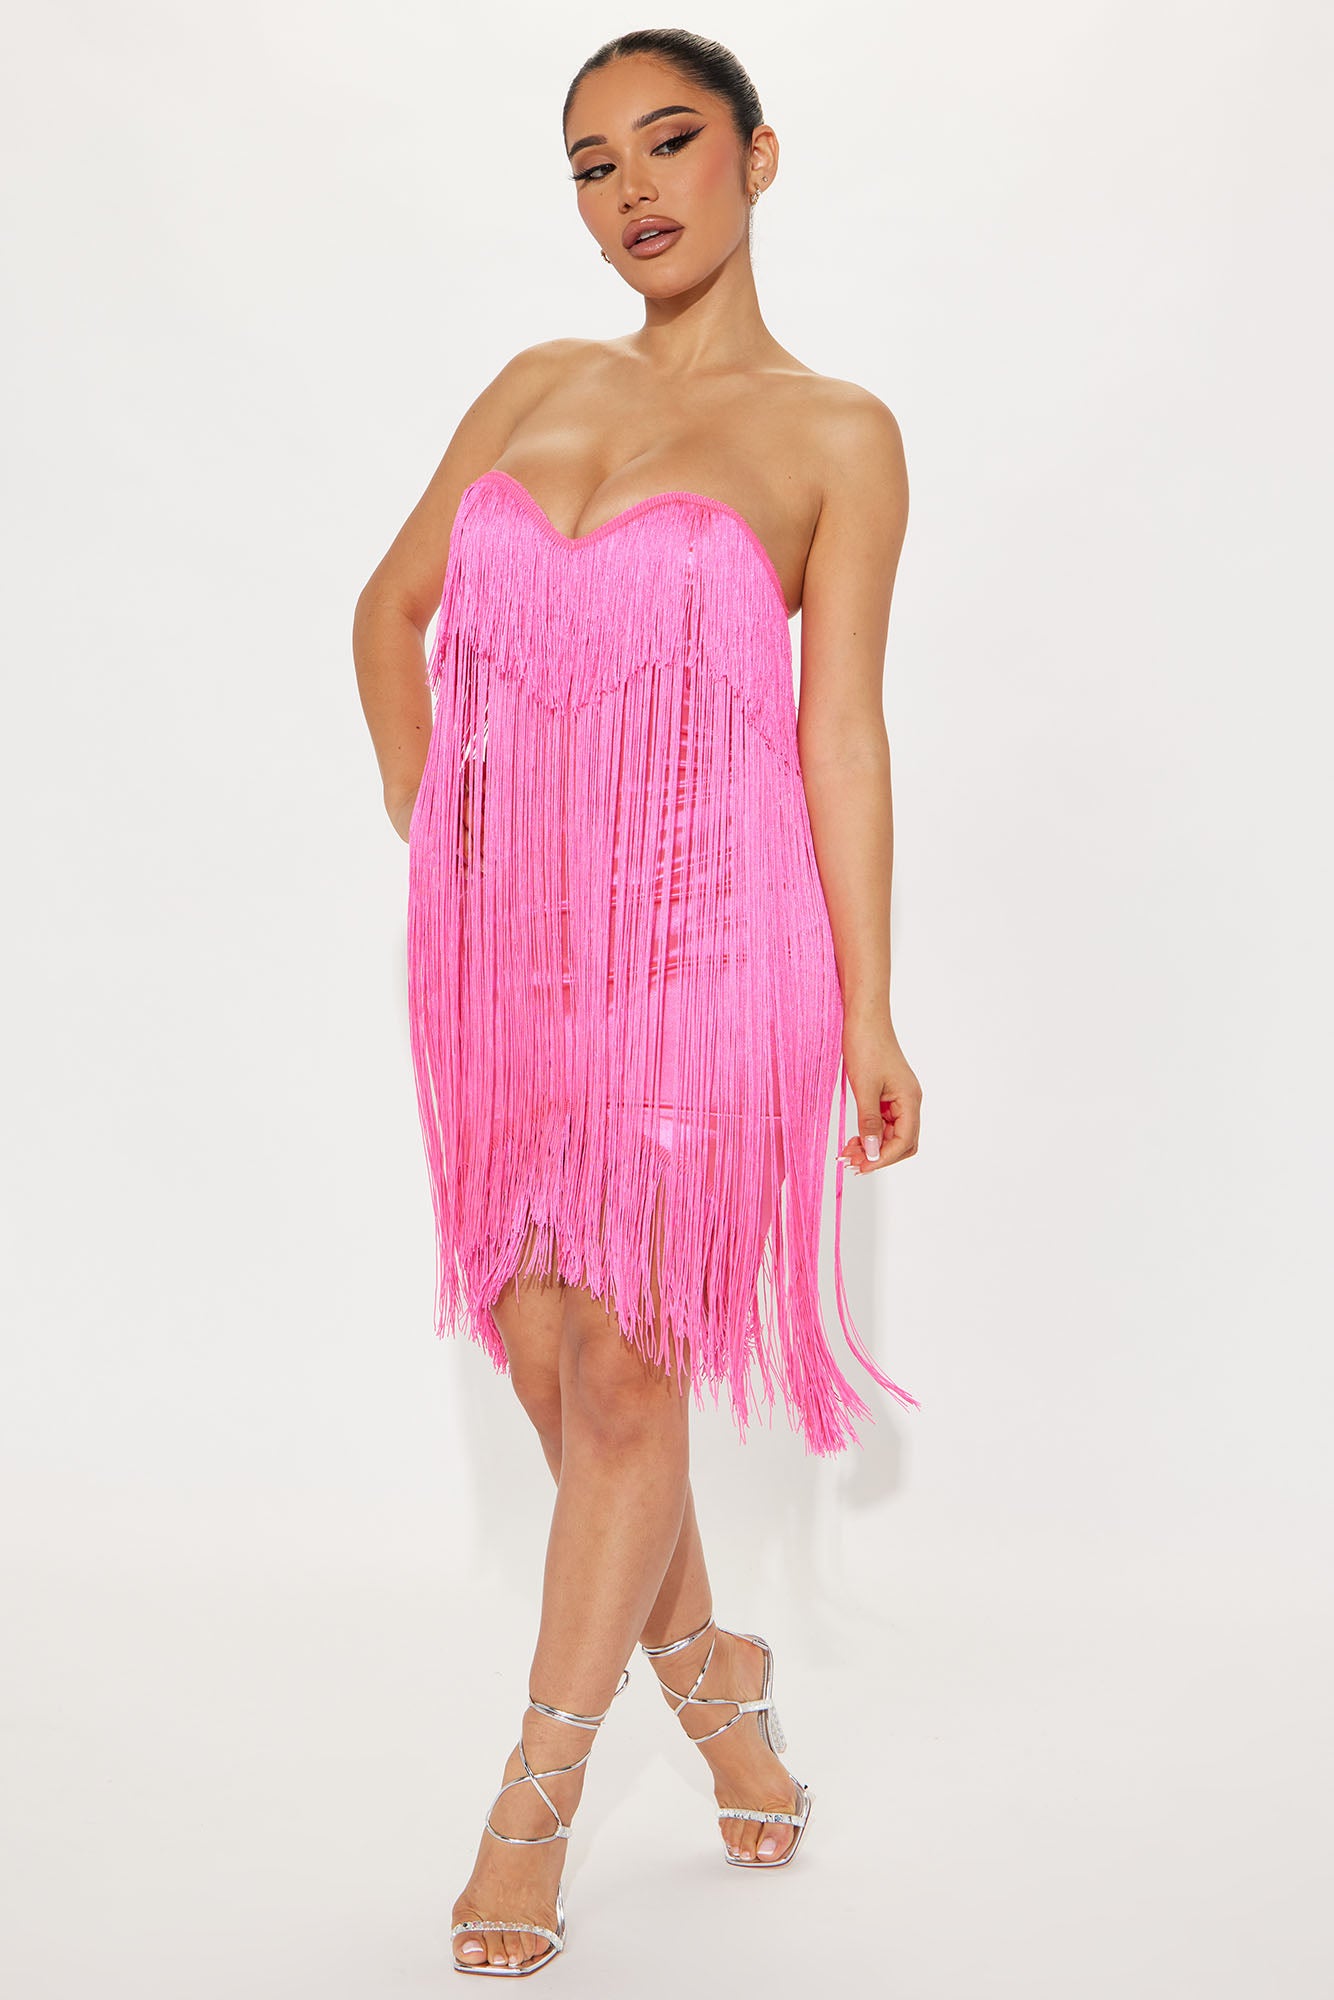 So In Love Tulle Mini Dress - Pink